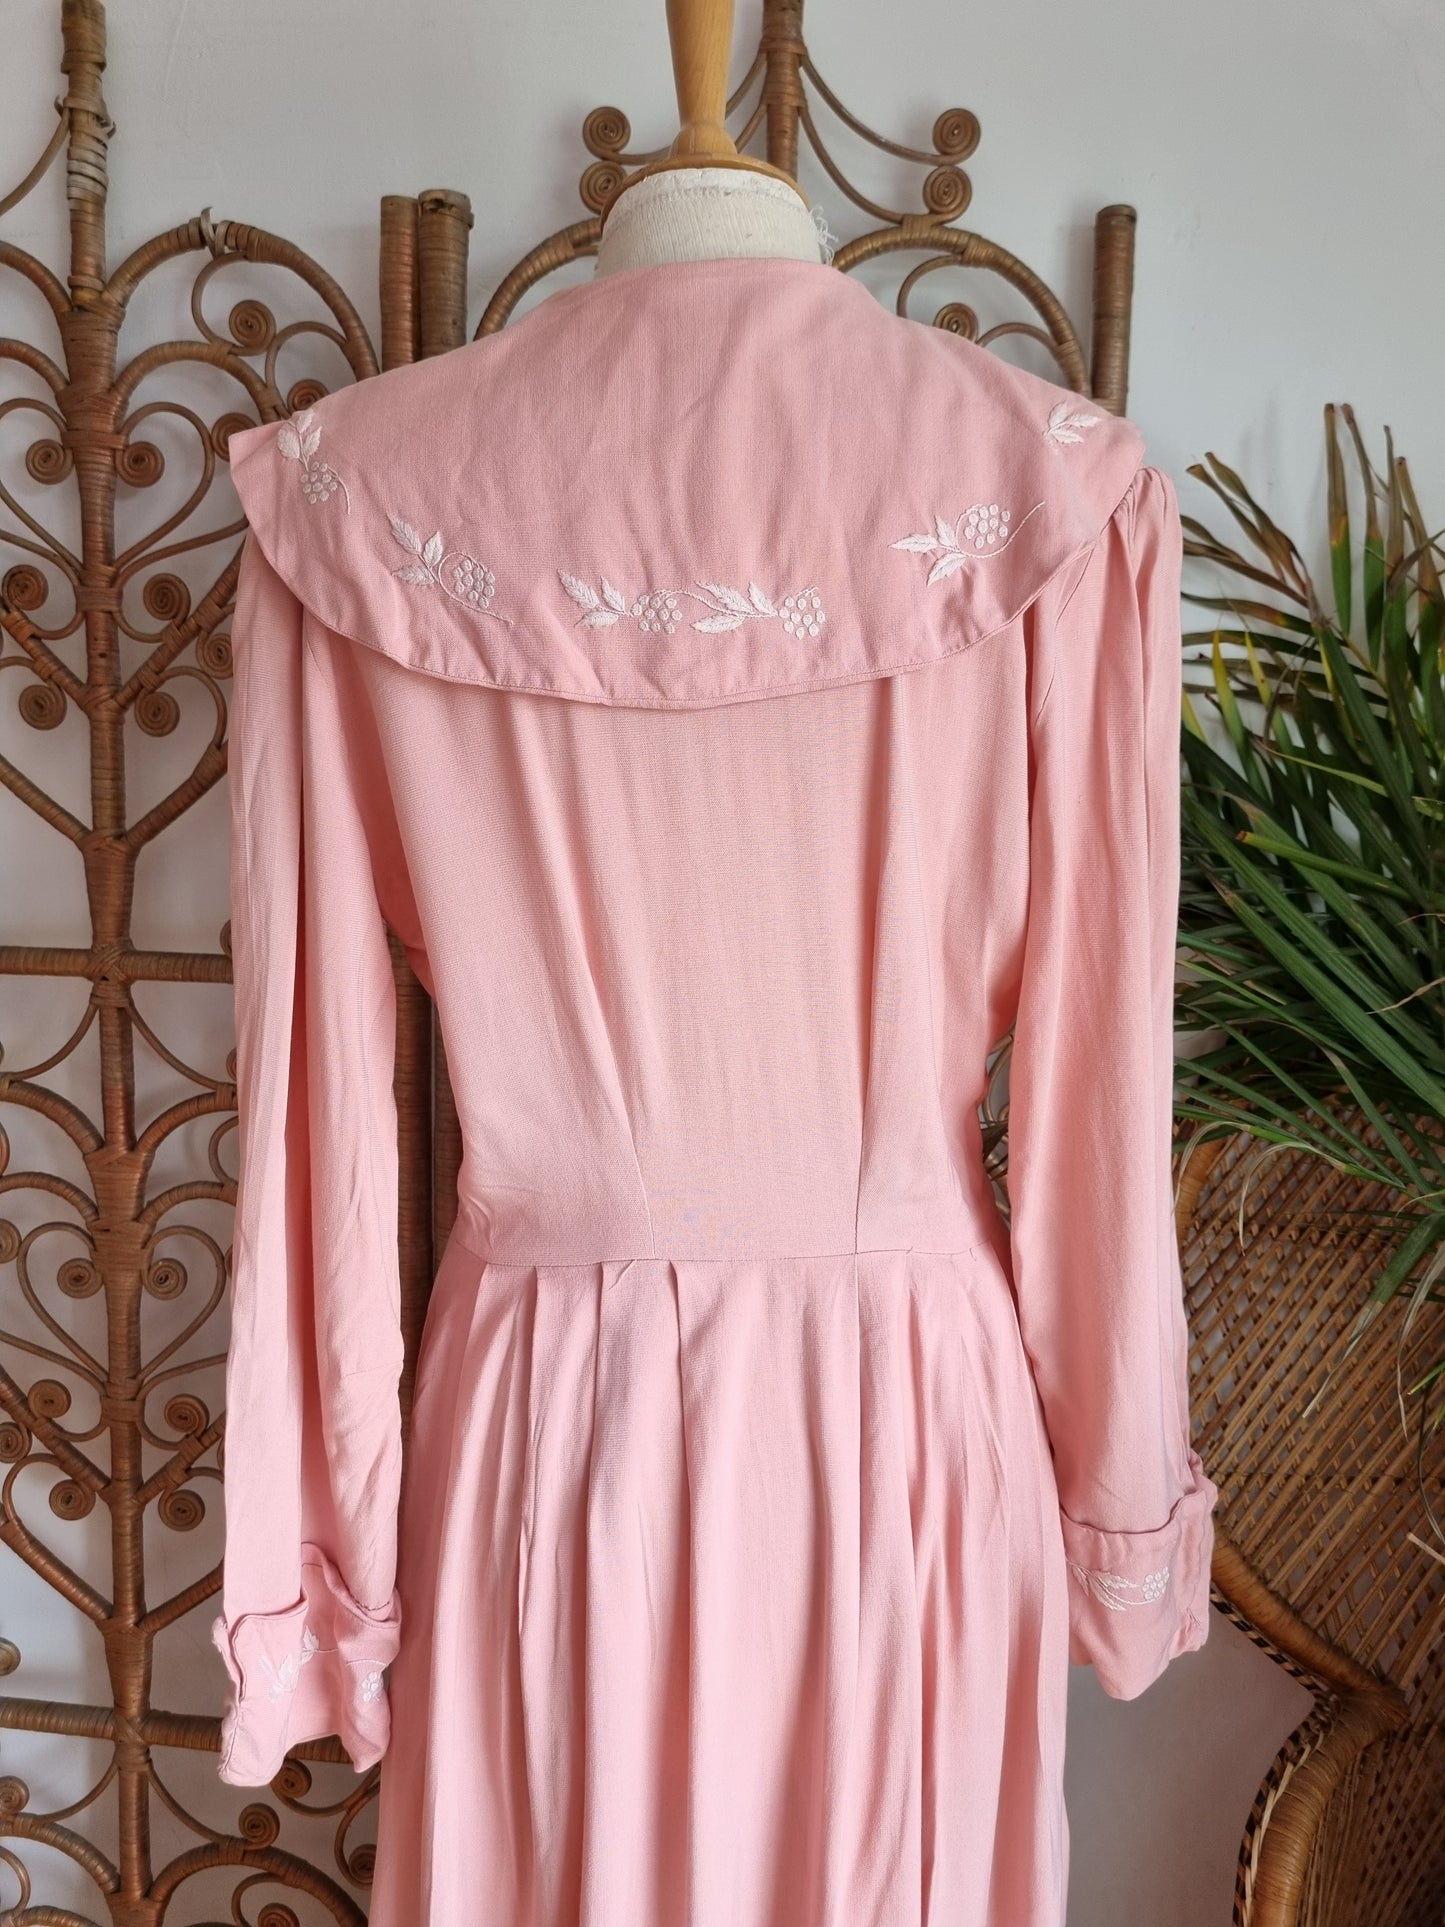 Vintage 1940s dress